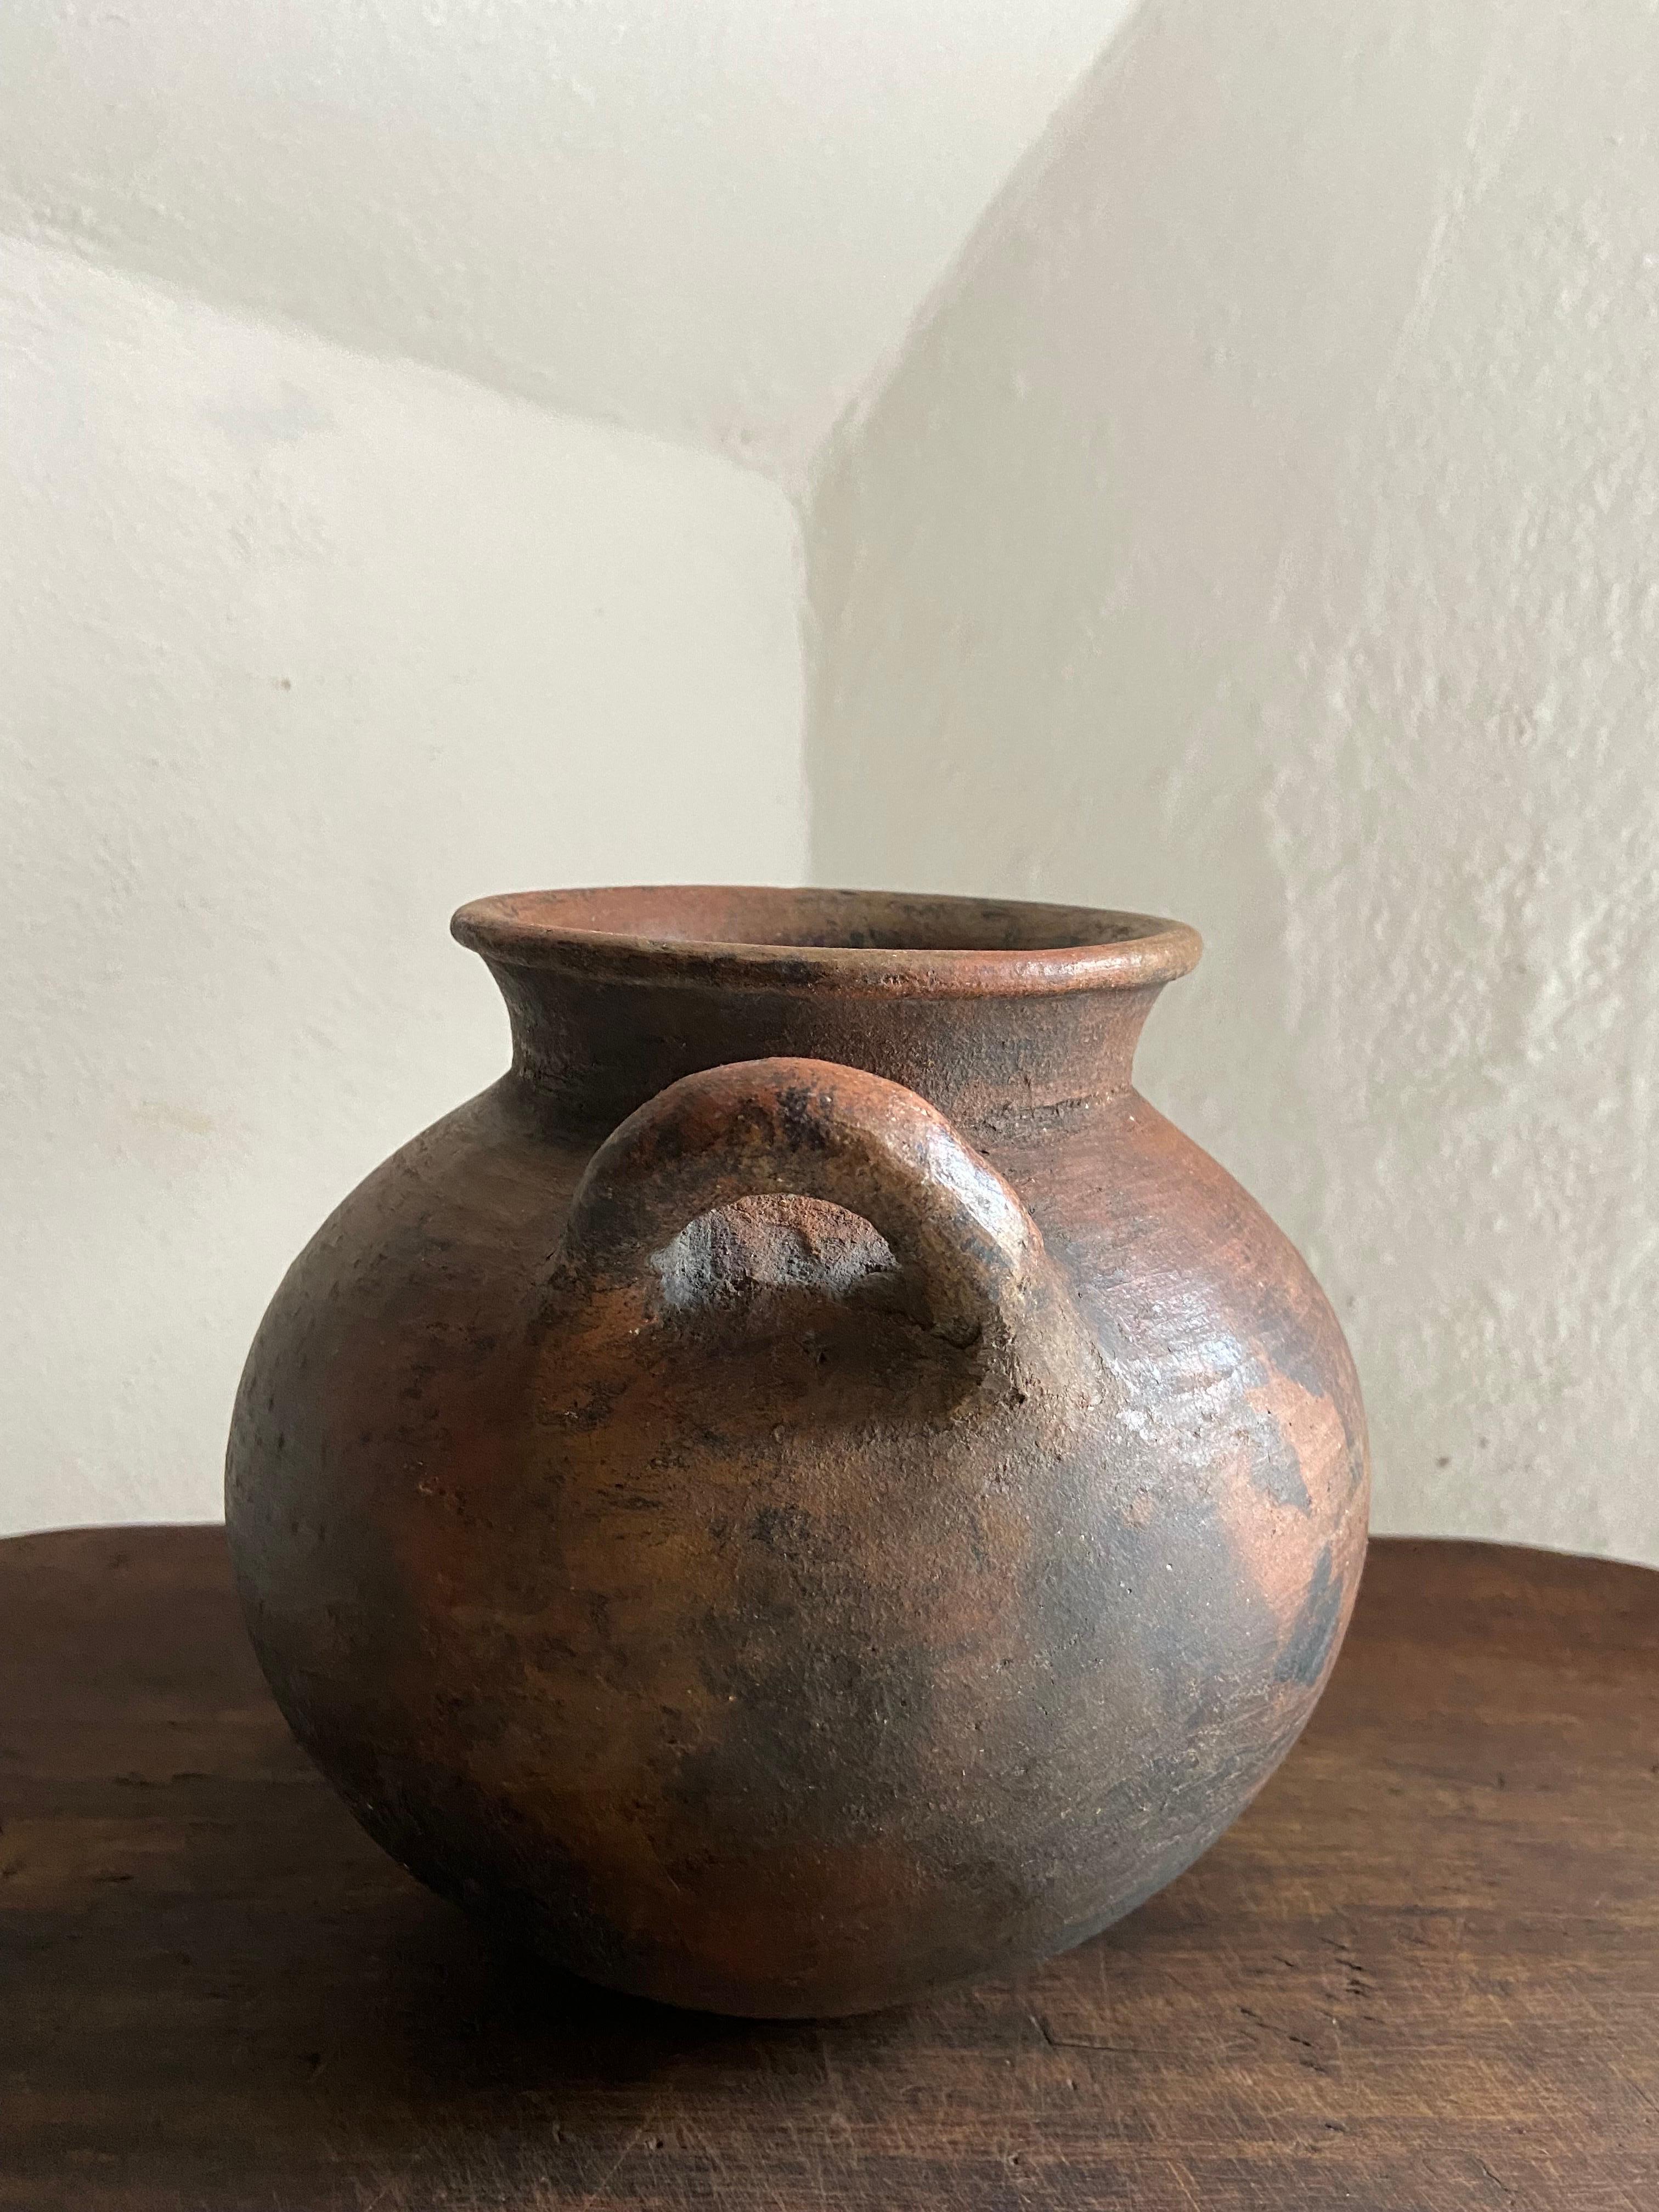 Fired Ceramic Vessel from the Mixteca Region of Oaxaca, Mexico, circa 1940´s